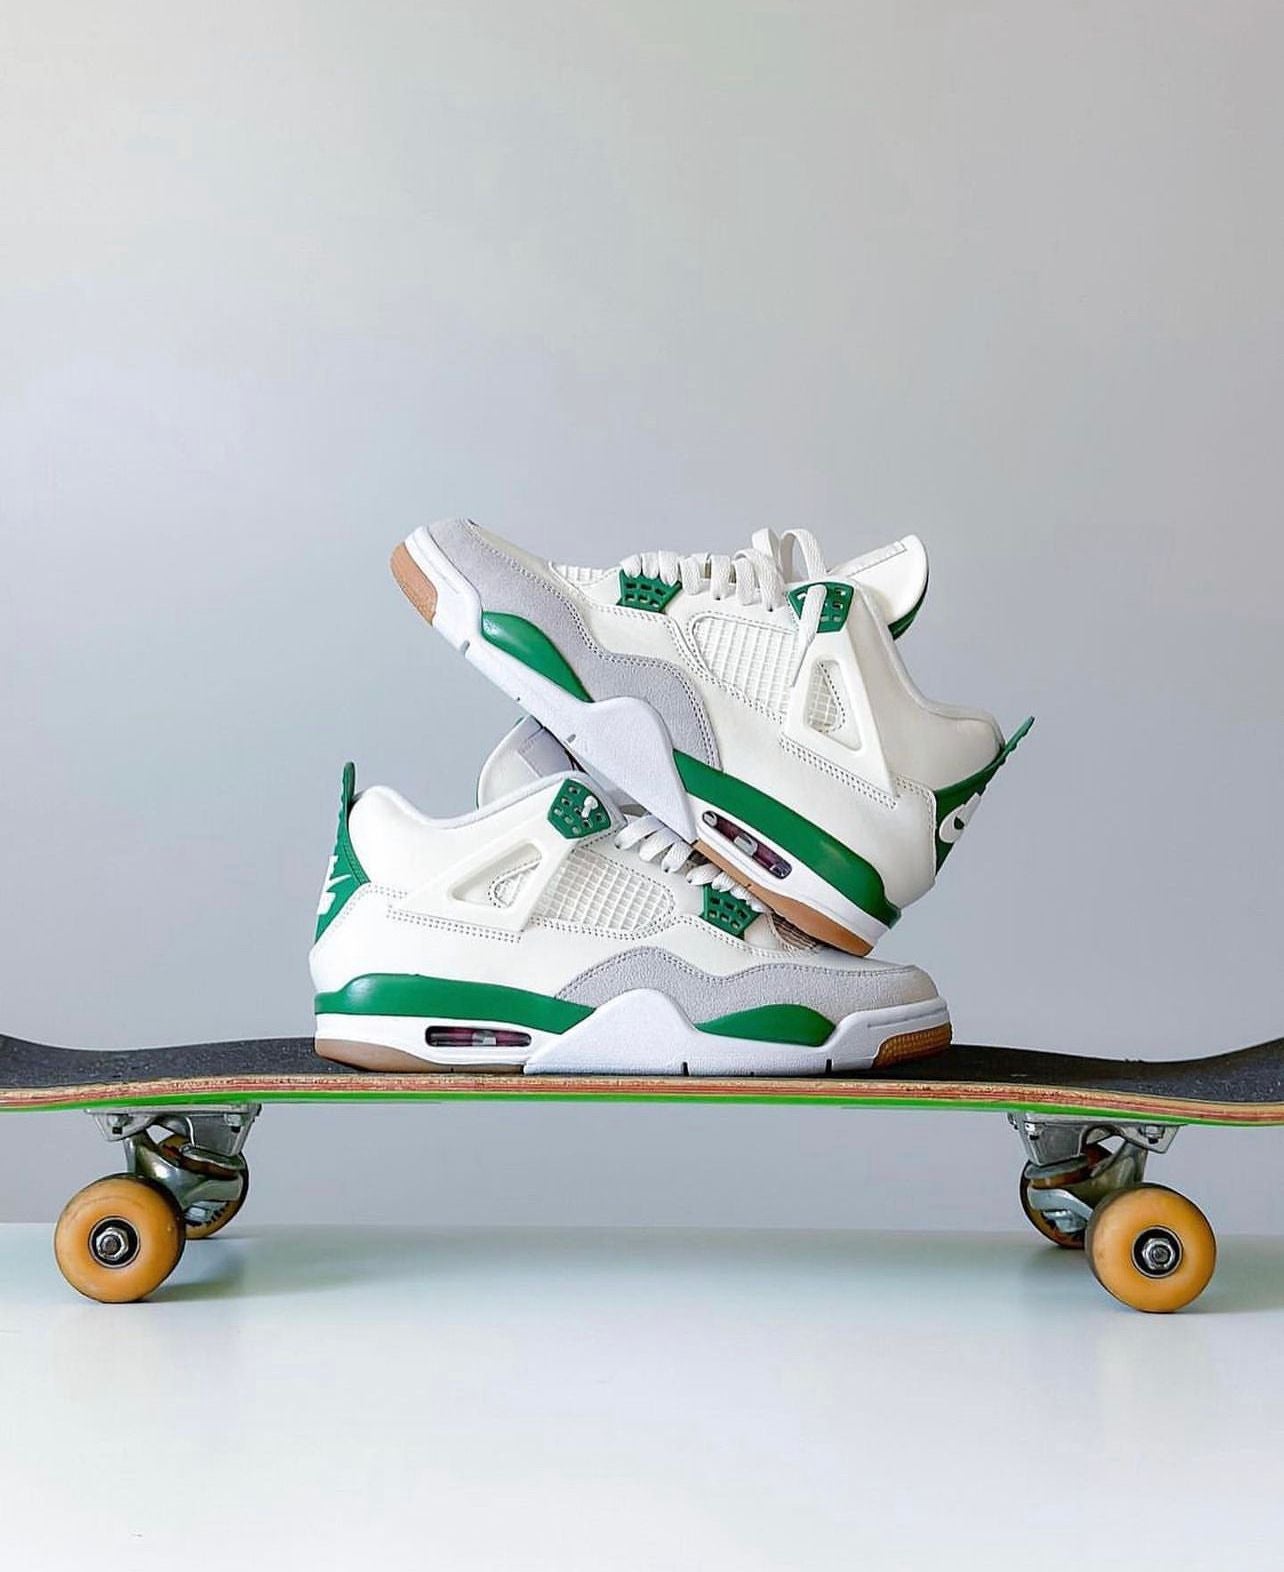 Nike Air Jordan Retro 4 SB Pine Green first copy shoes